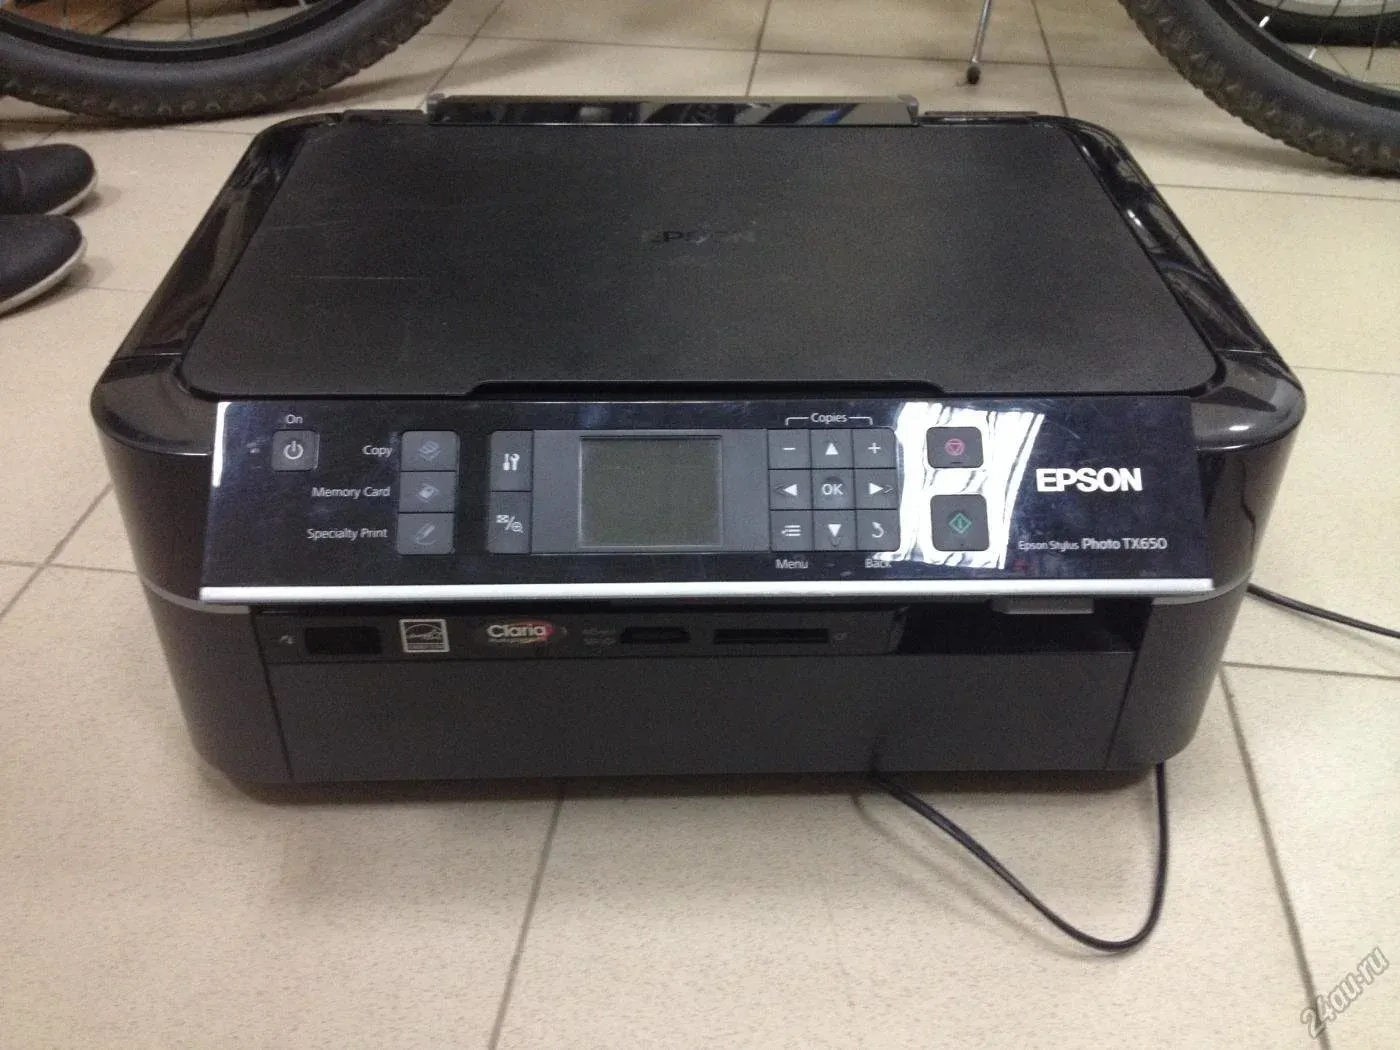 Epson 650. Epson tx650. МФУ Эпсон 650. Epson Stylus photo tx650. Принтер Epson Stylus photo tx650.